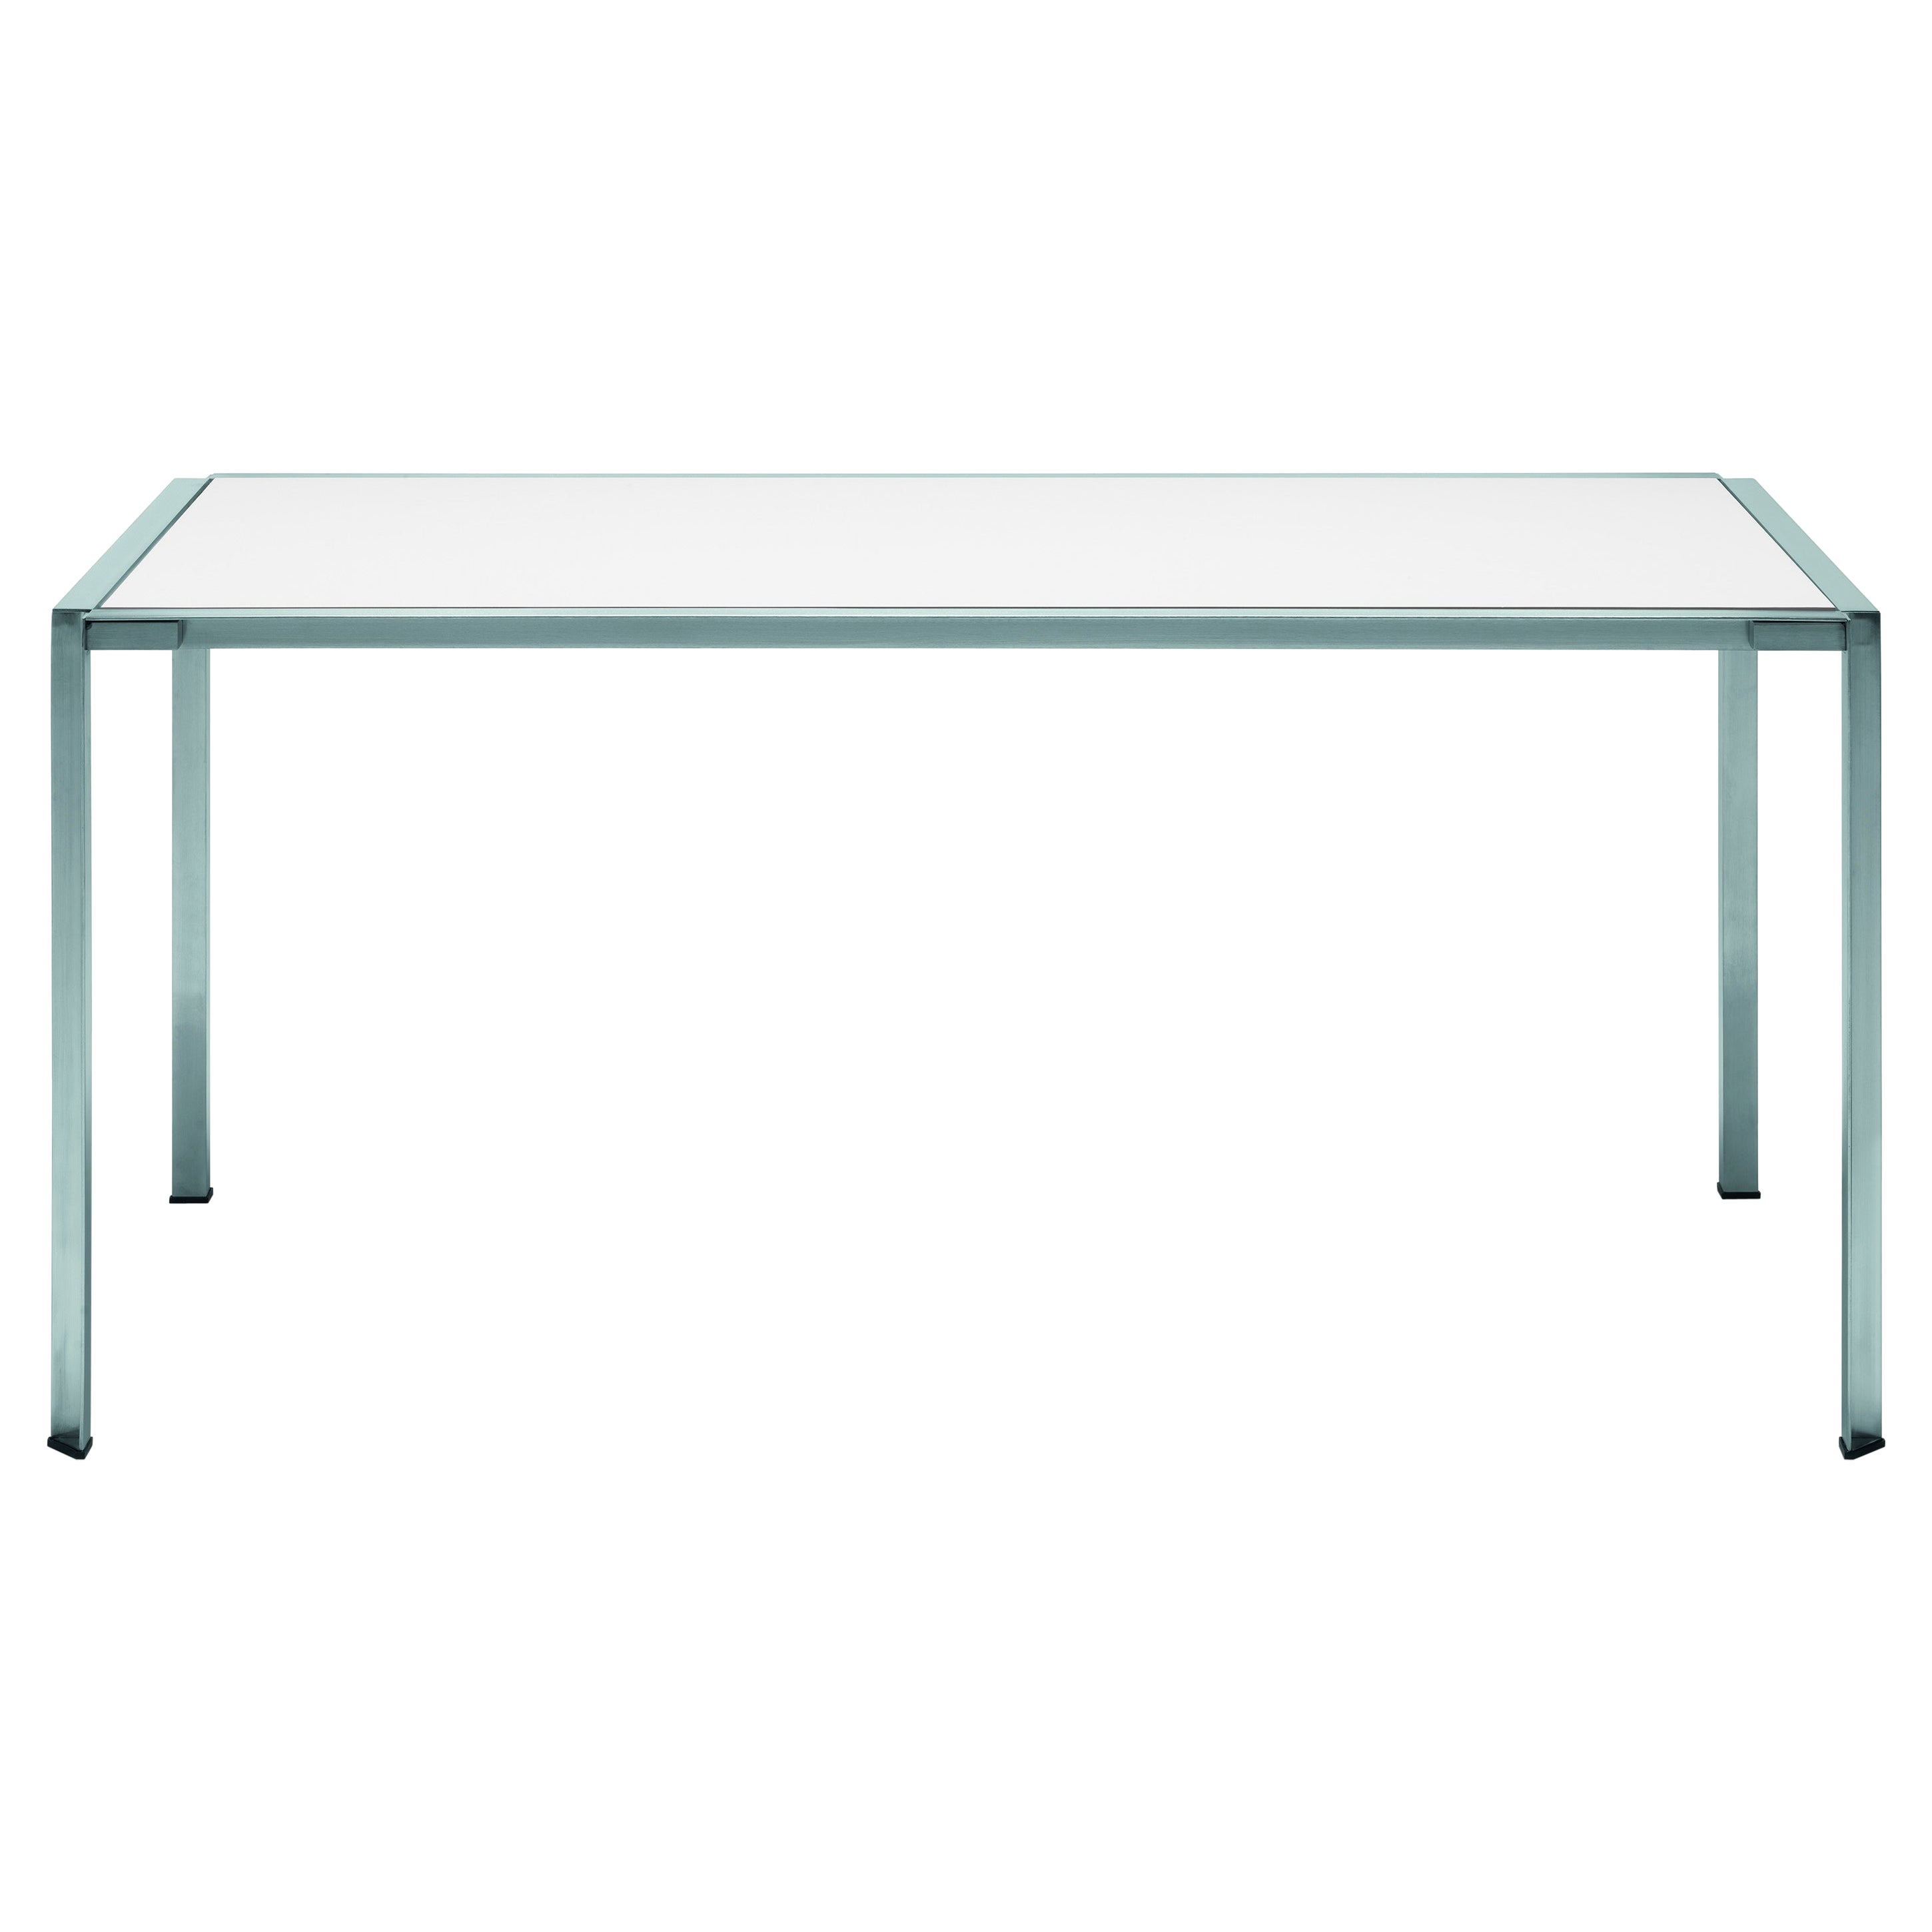 Table Alias 218_O verte avec cadre en acier inoxydable brossé et plateau en Dekton 